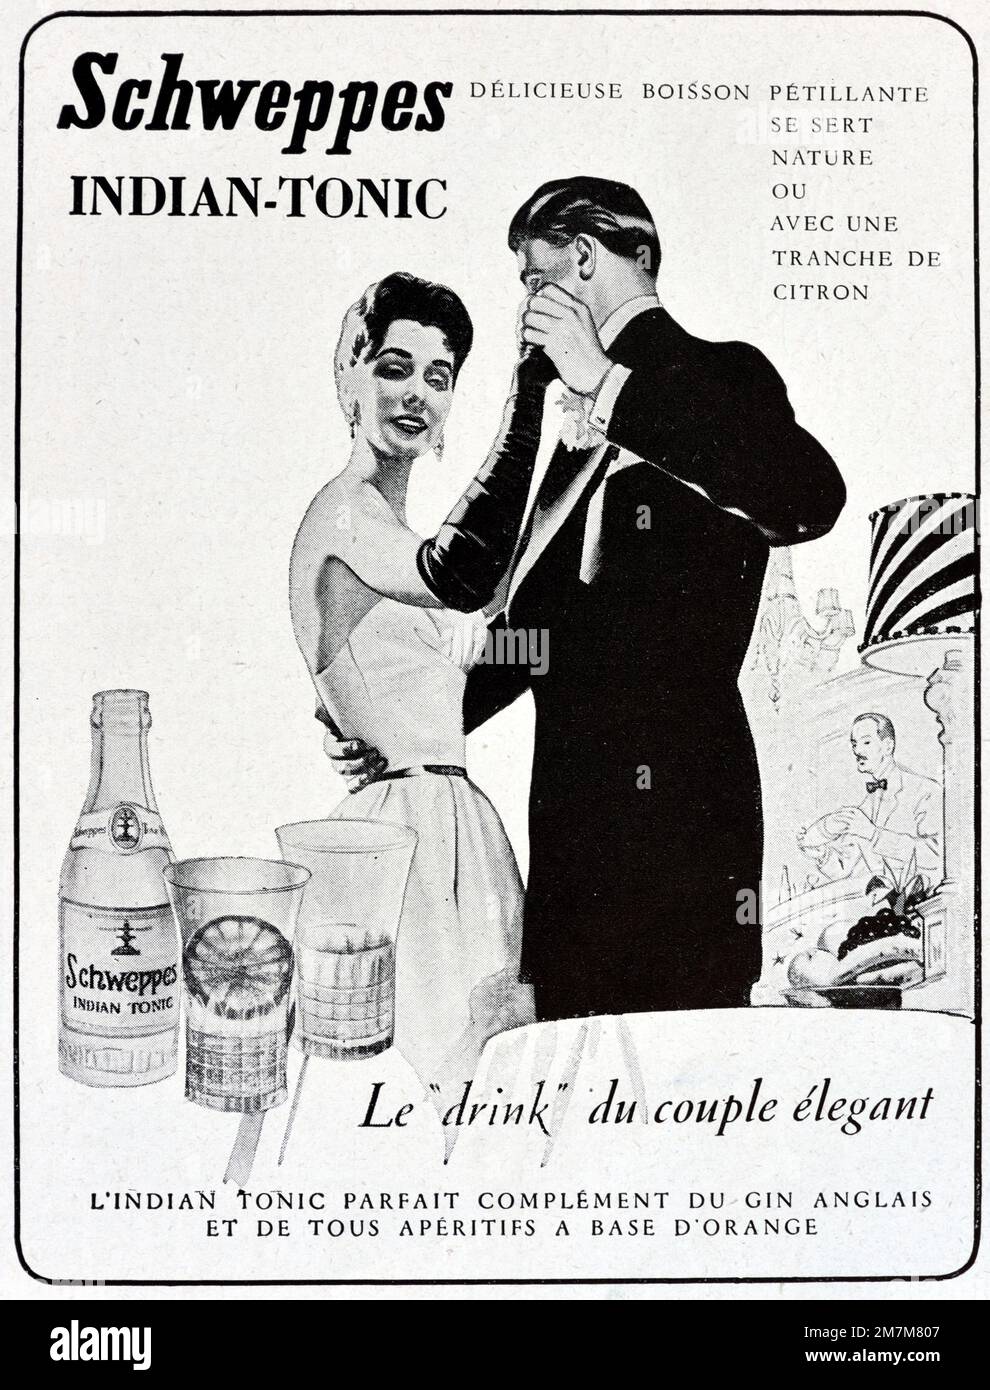 1962 Maidenform Girdle Vintage Advertisement Bathroom Wall Art Bedroom  Decor Original Magazine Print Ad Vintage Lingerie Fashion Ad Pin Up